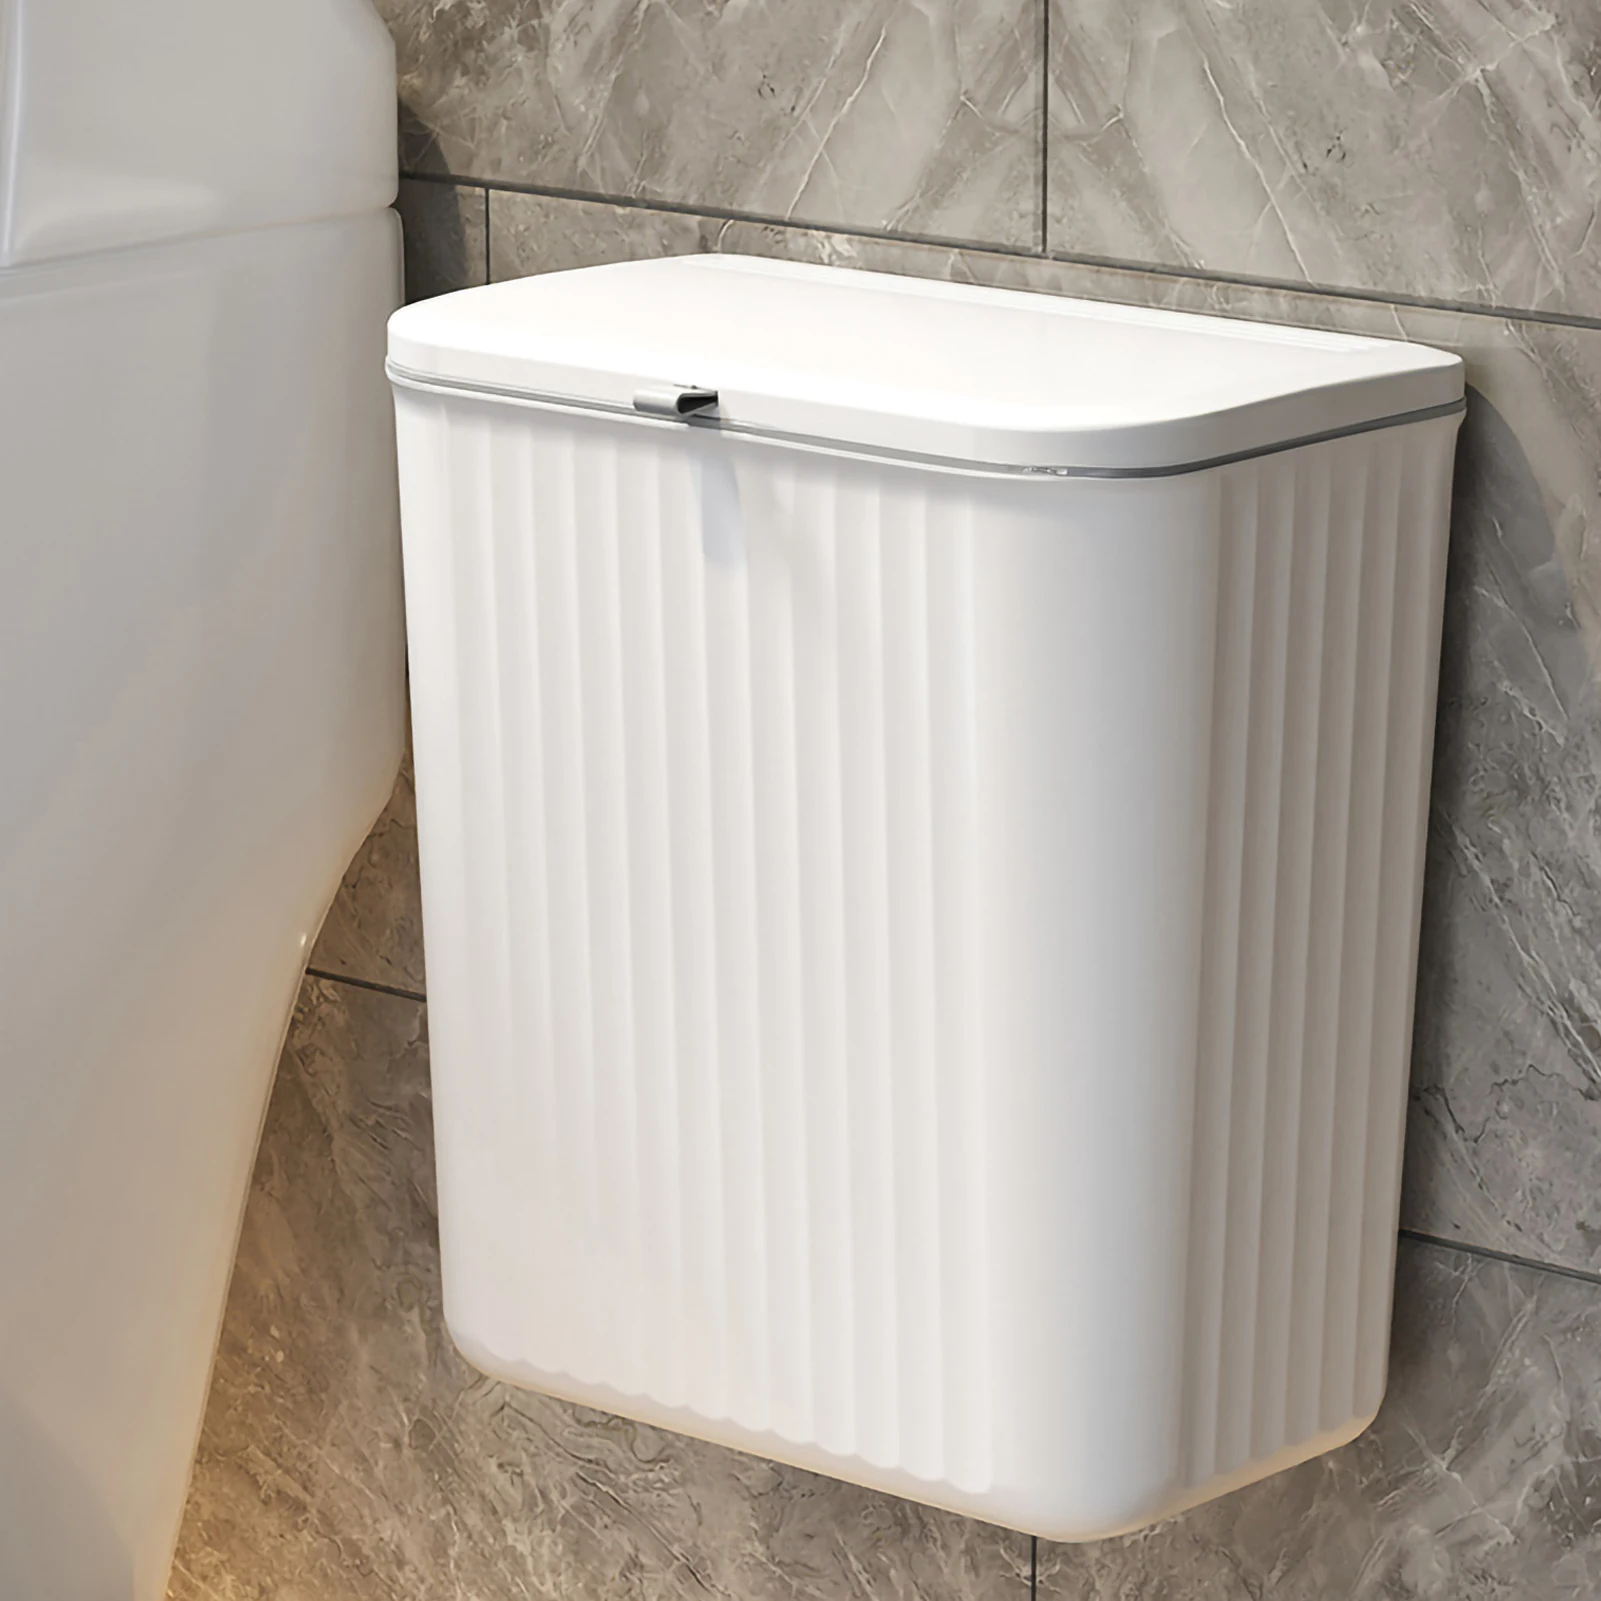 Household Kitchen Wall-mounted Trash Can,  Kitchen Waste Storage Bin, Toilet Hanging Toilet Paper Storage Bucket